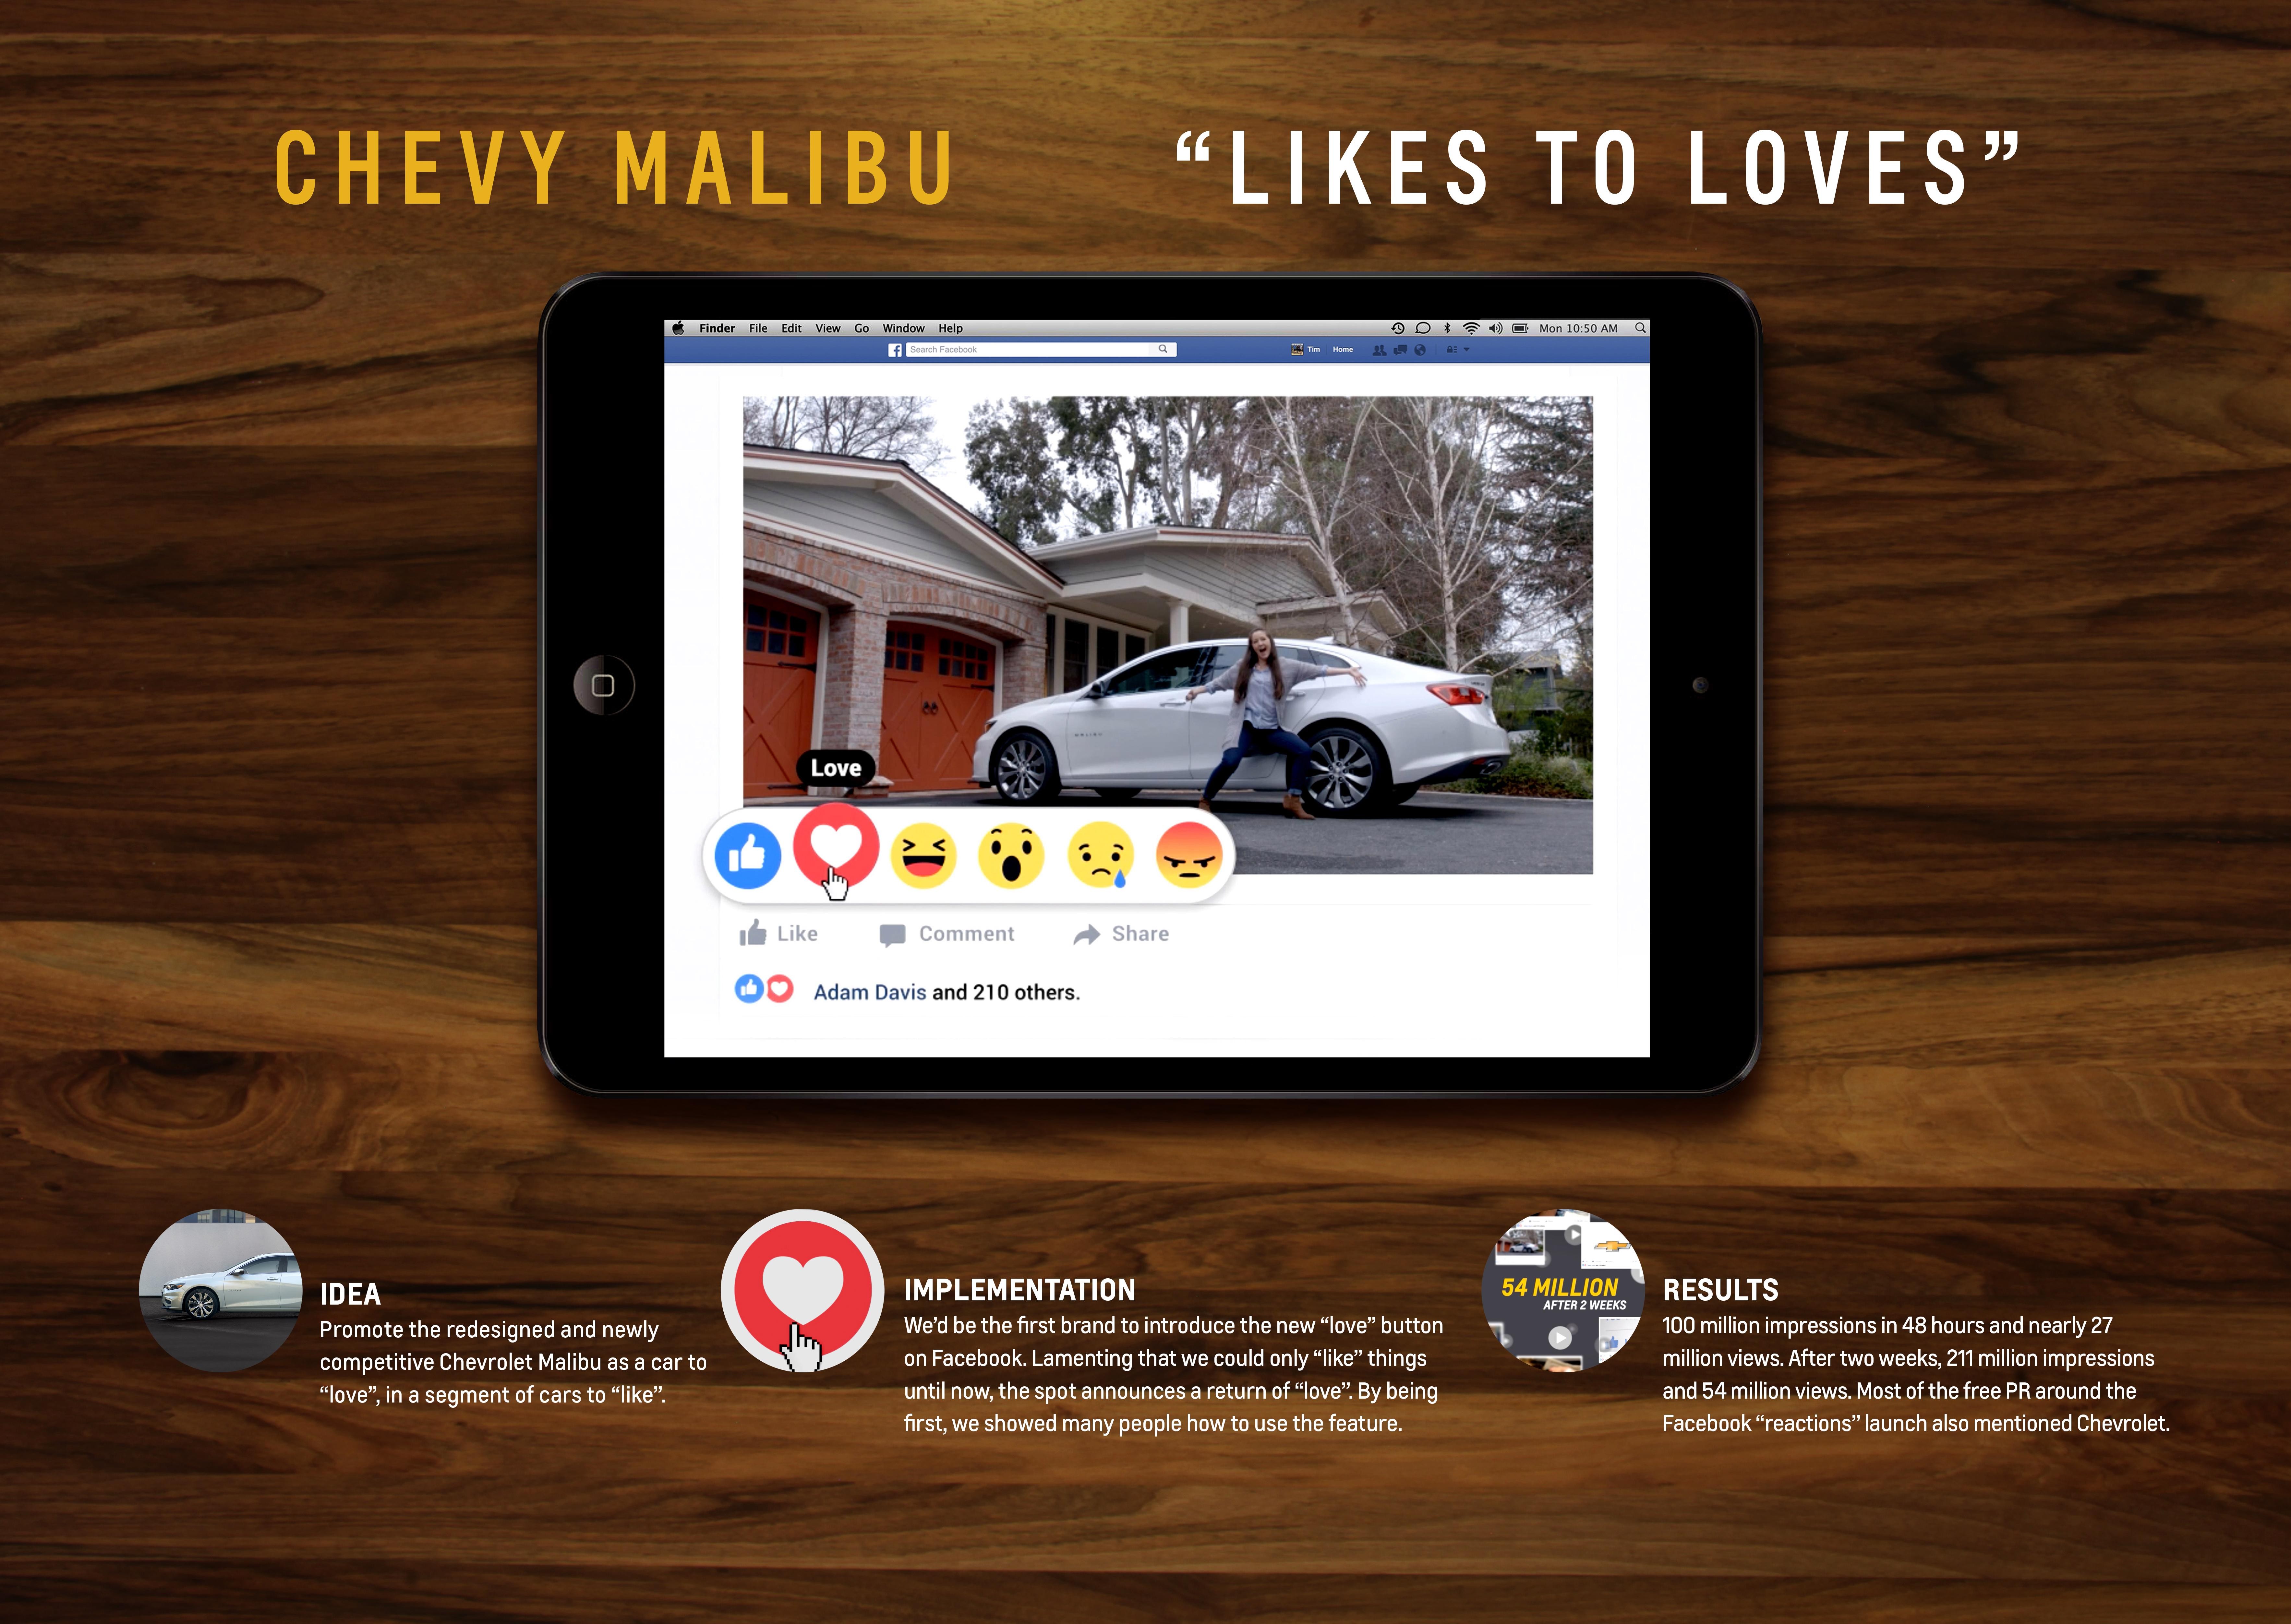 Malibu and Facebook "Likes to Love"